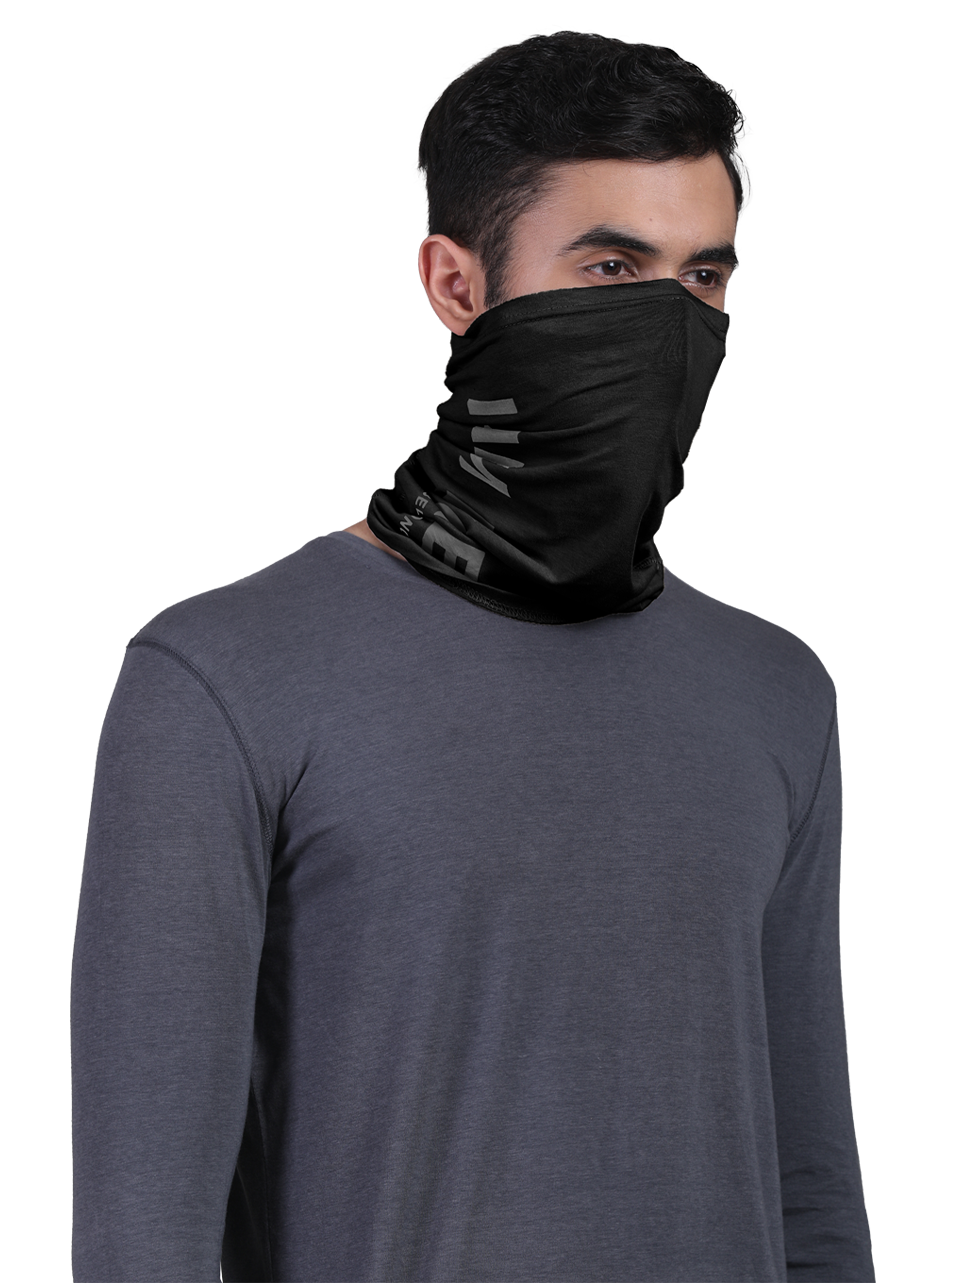 Unisex Bandana Masks - Printed (Pack of 5) - freecultr.com